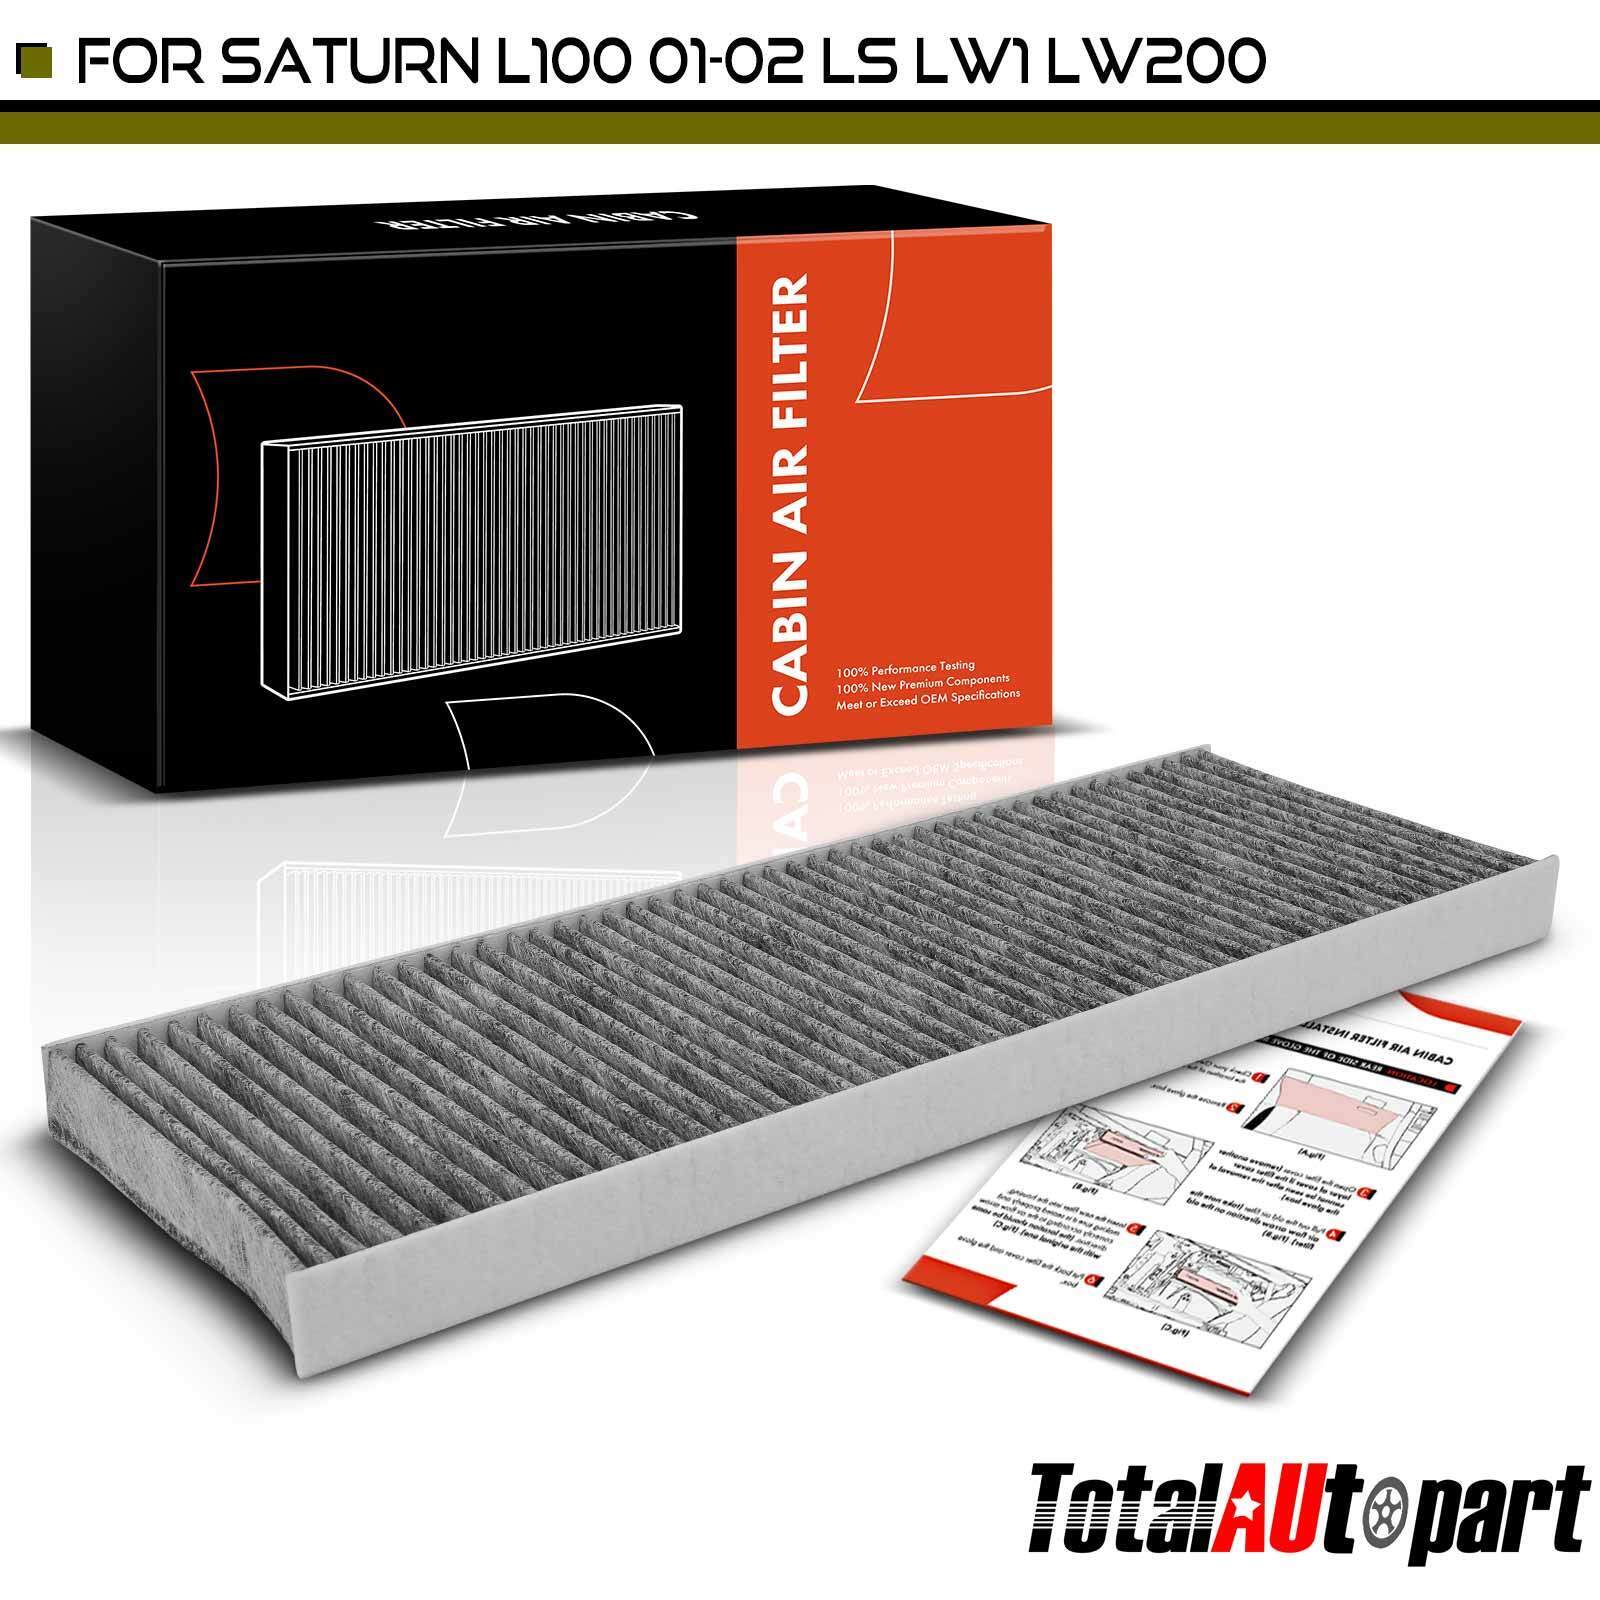 Activated Carbon Cabin Air Filter for Saturn L100 01-02 L200 L300 LS LW1 LW200